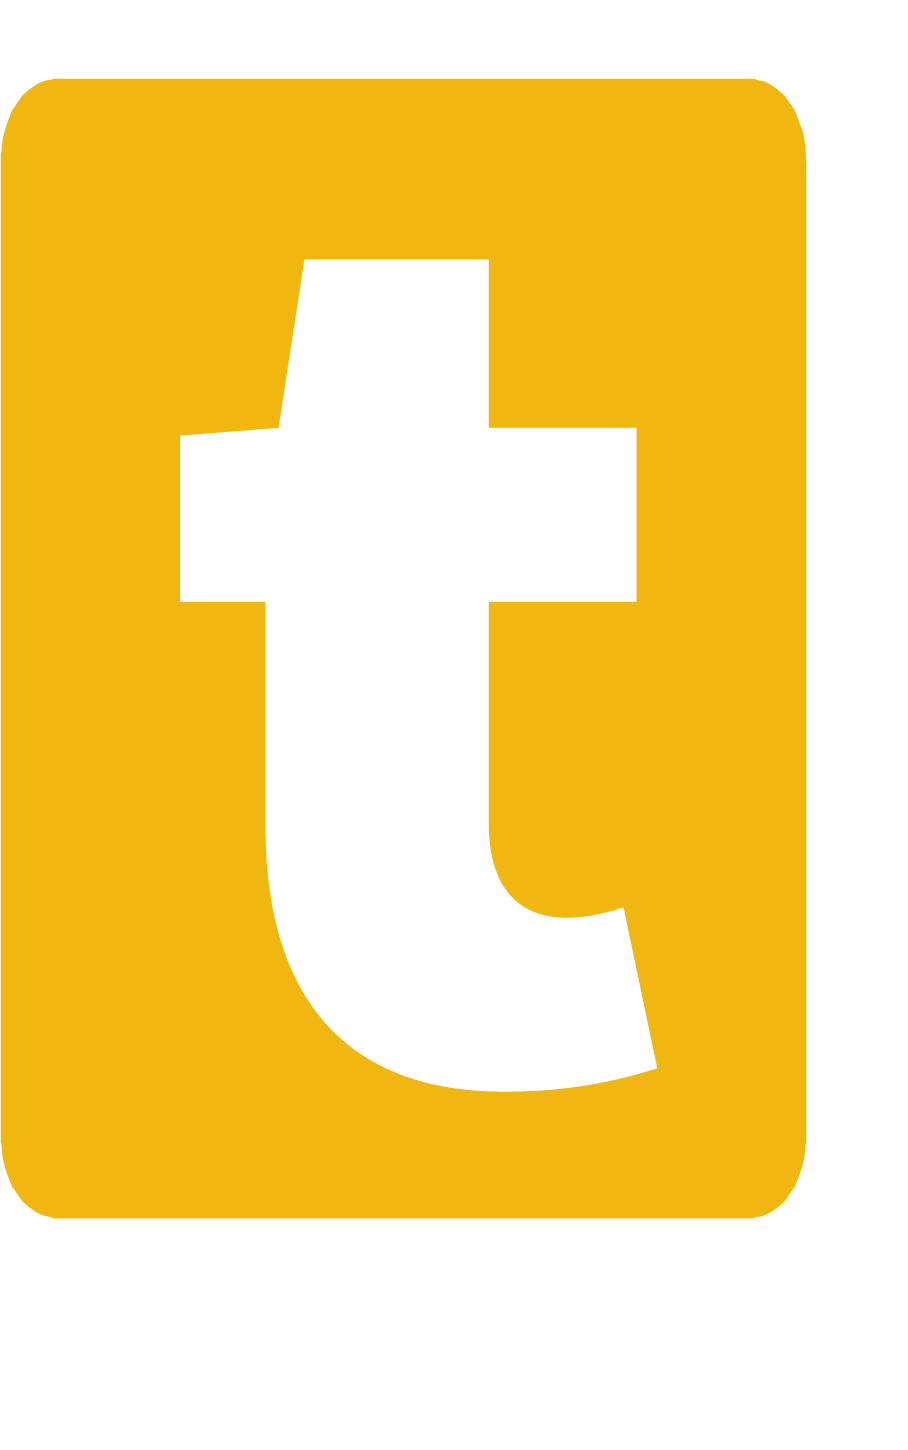 logo sm